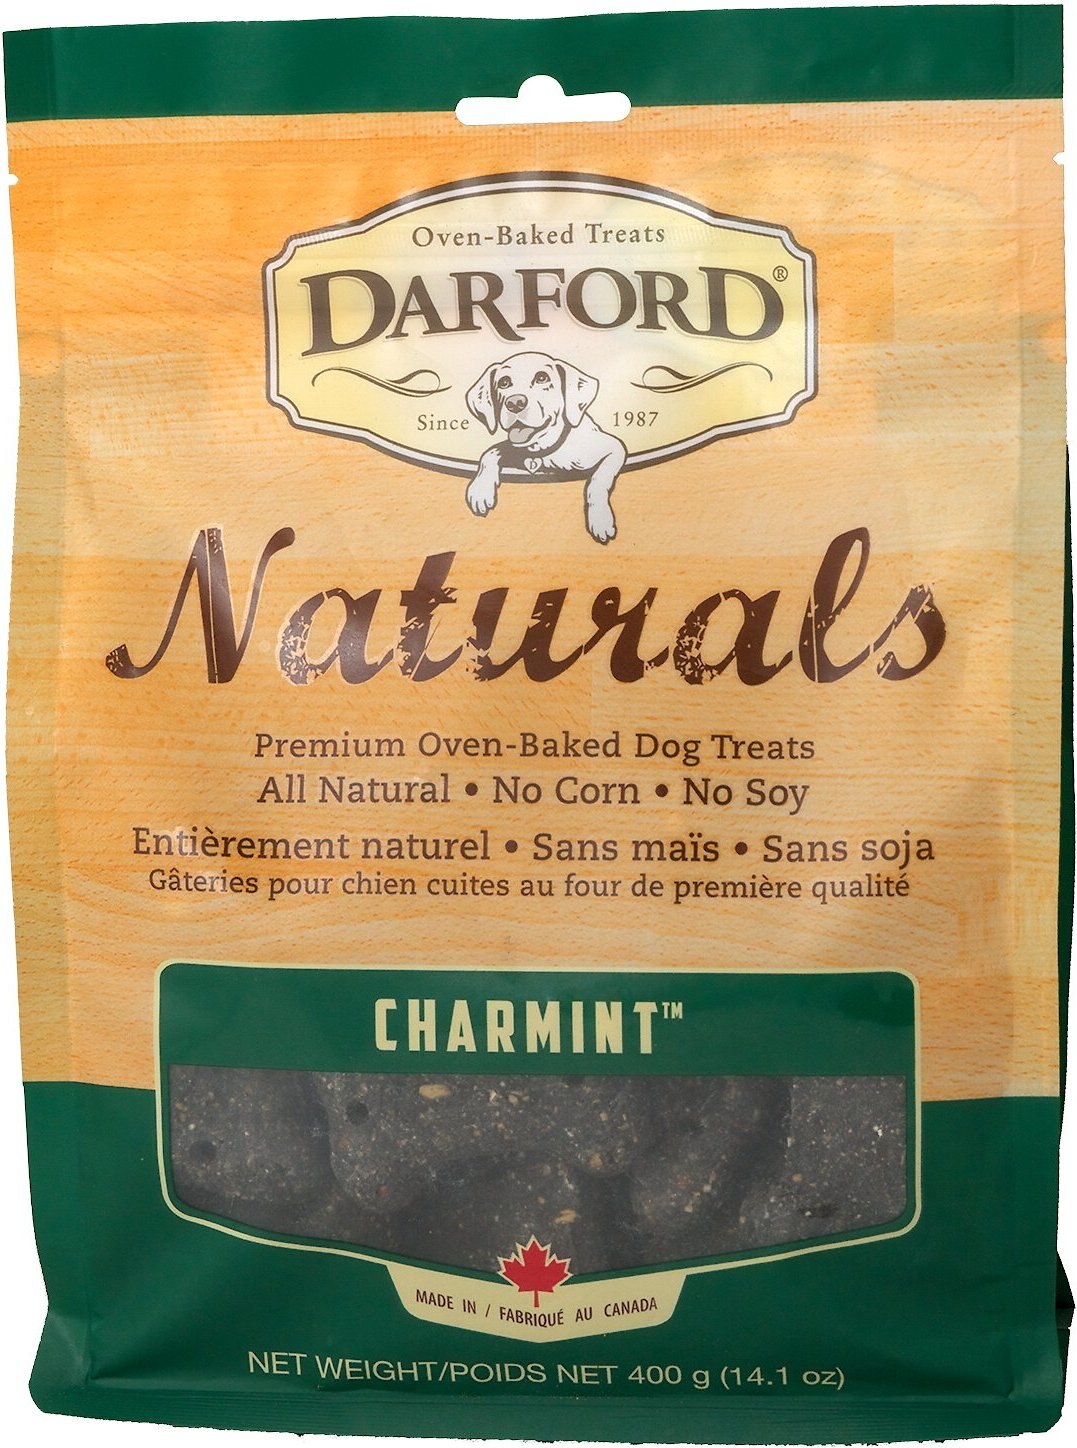 Darford Naturals Oven Baked Charmint Minis Dog Treats 12 lb 